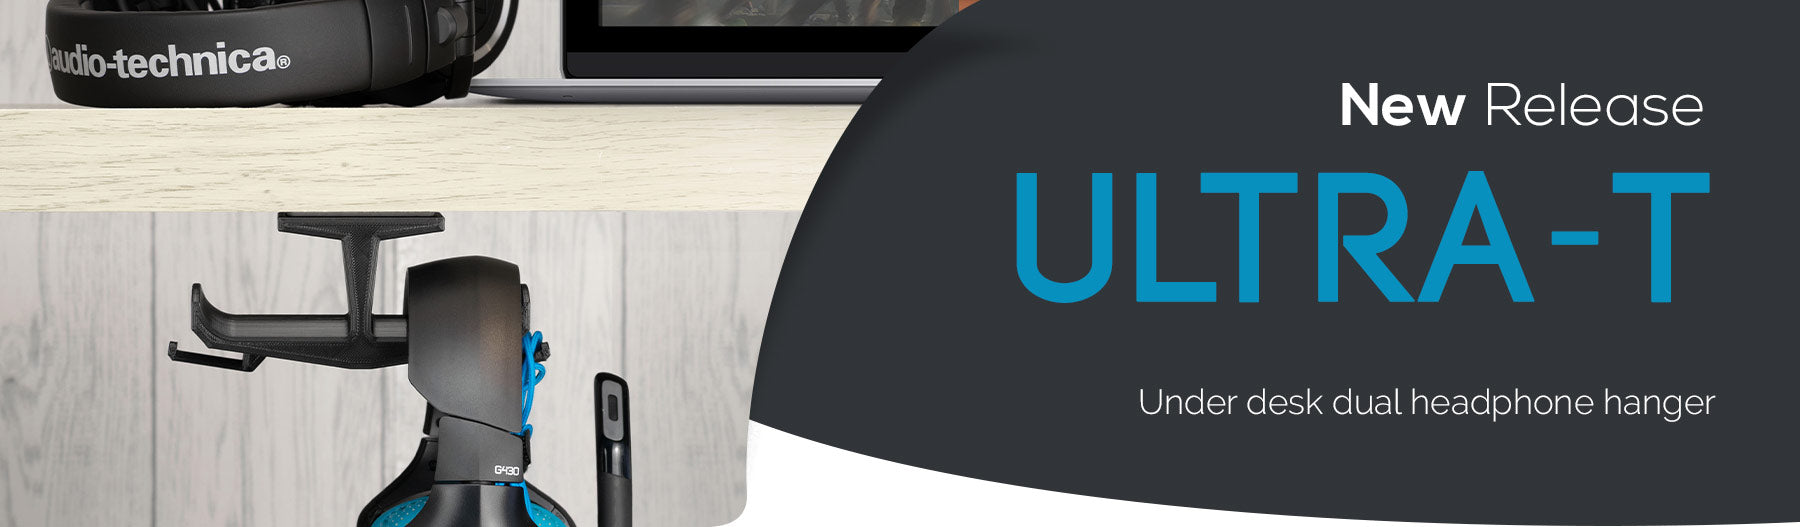 New Release - Ultra-T Hanger